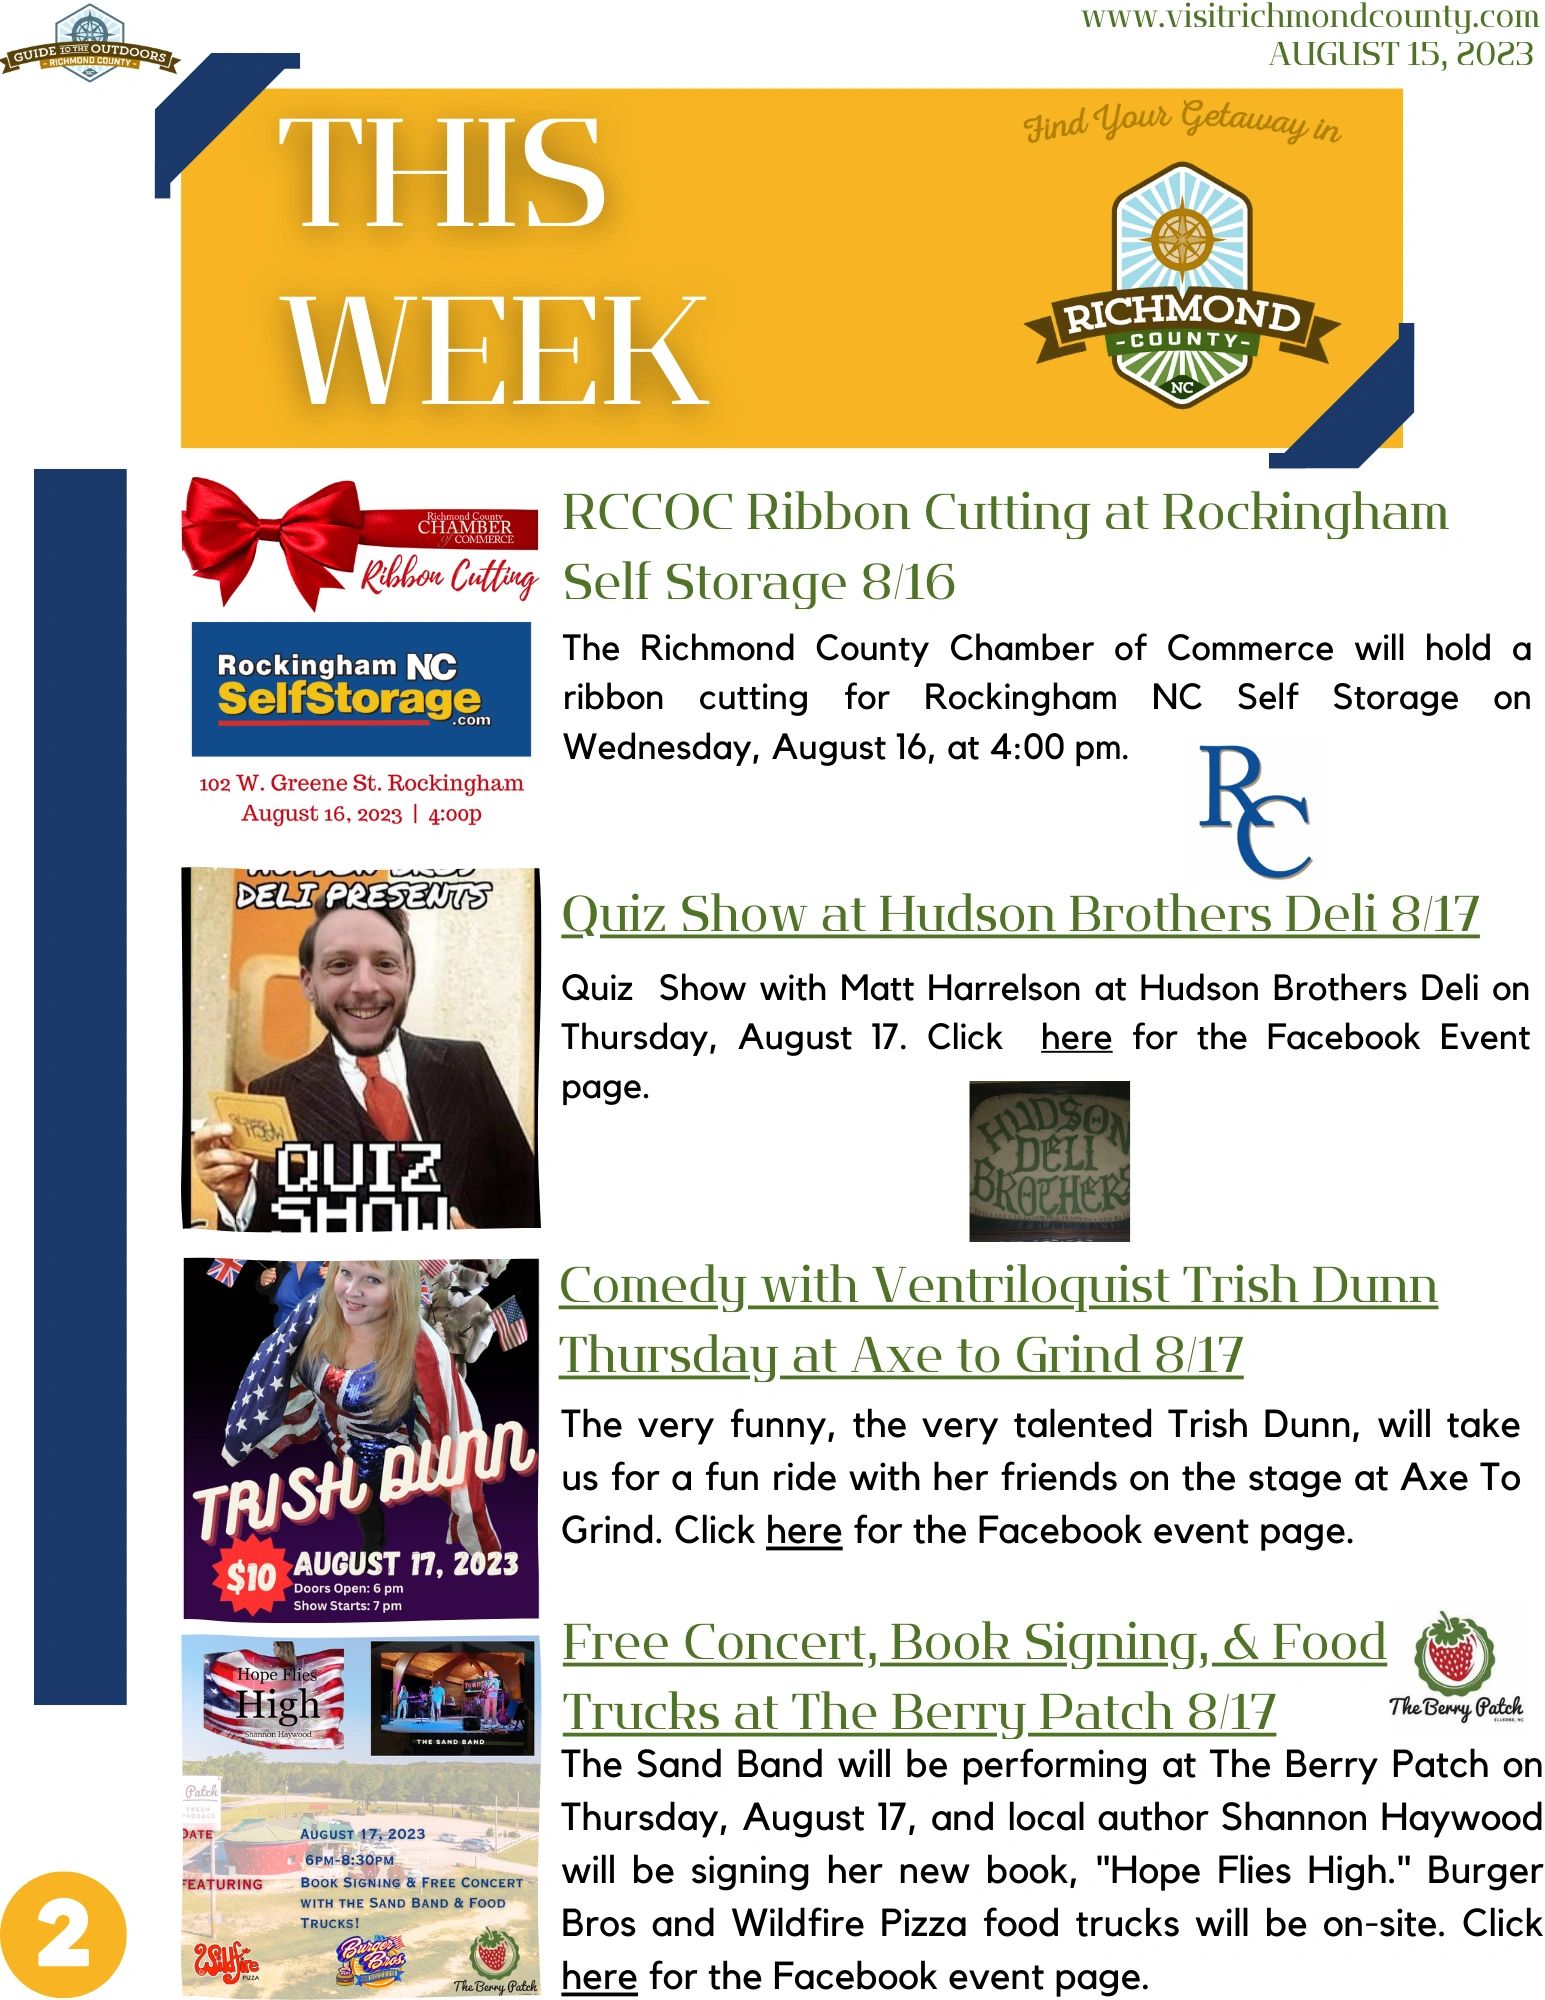 RCTDA Newsletter 8/15/23: 19th Edition